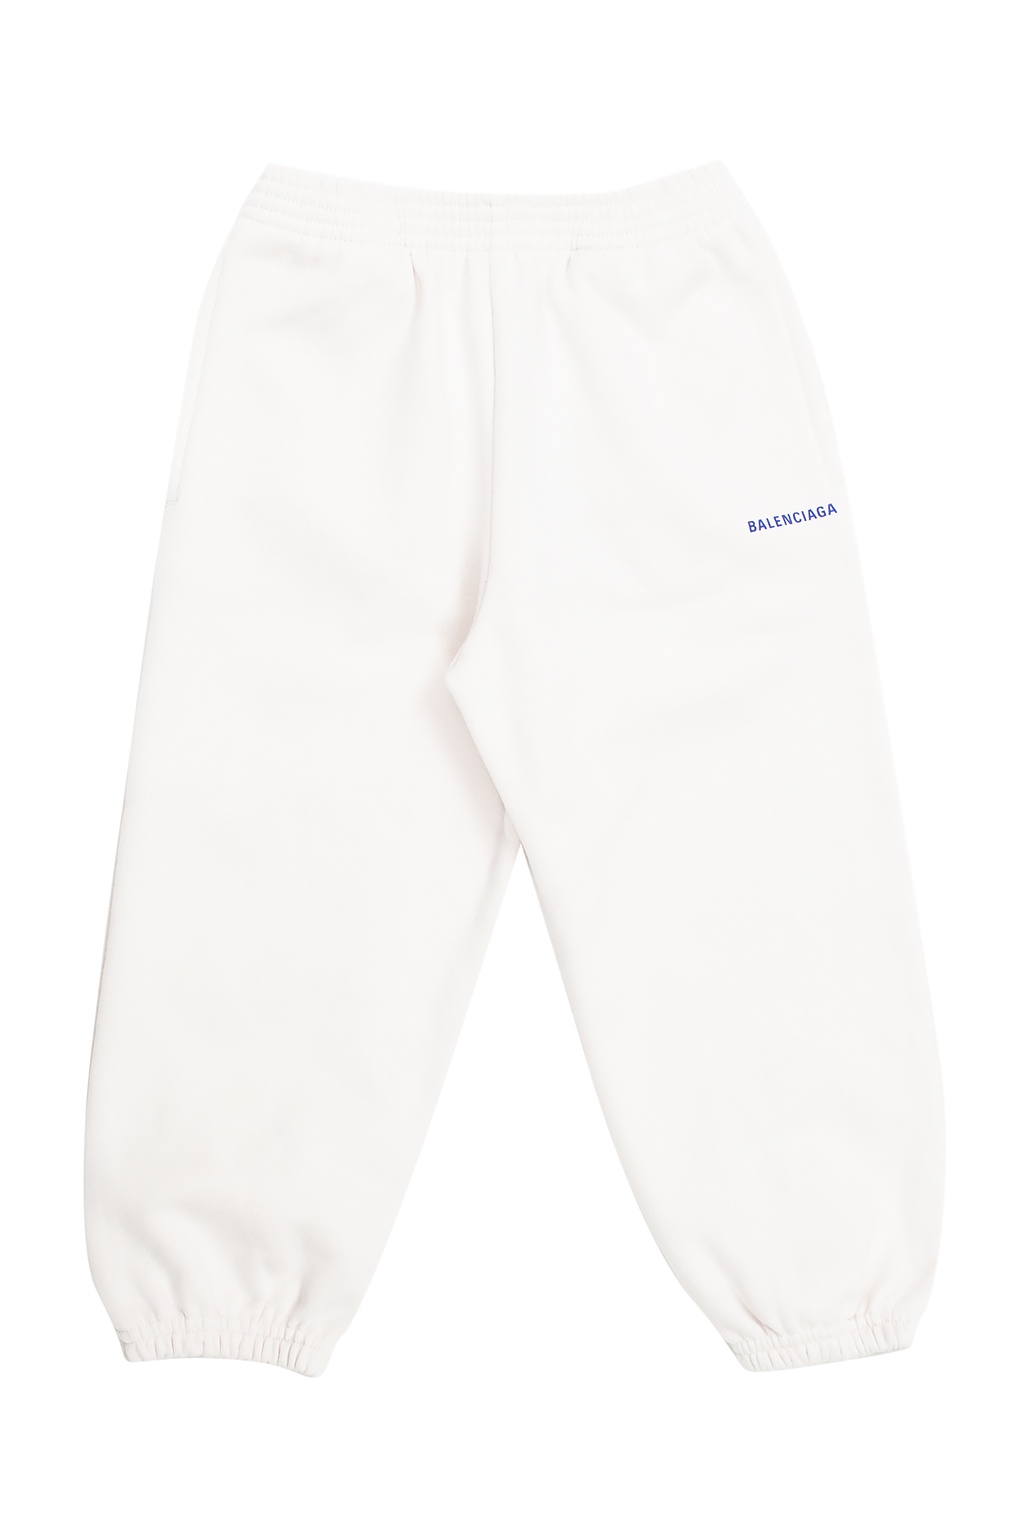 Balenciaga Kids Mix Print Pants & Peep-Toe Heels